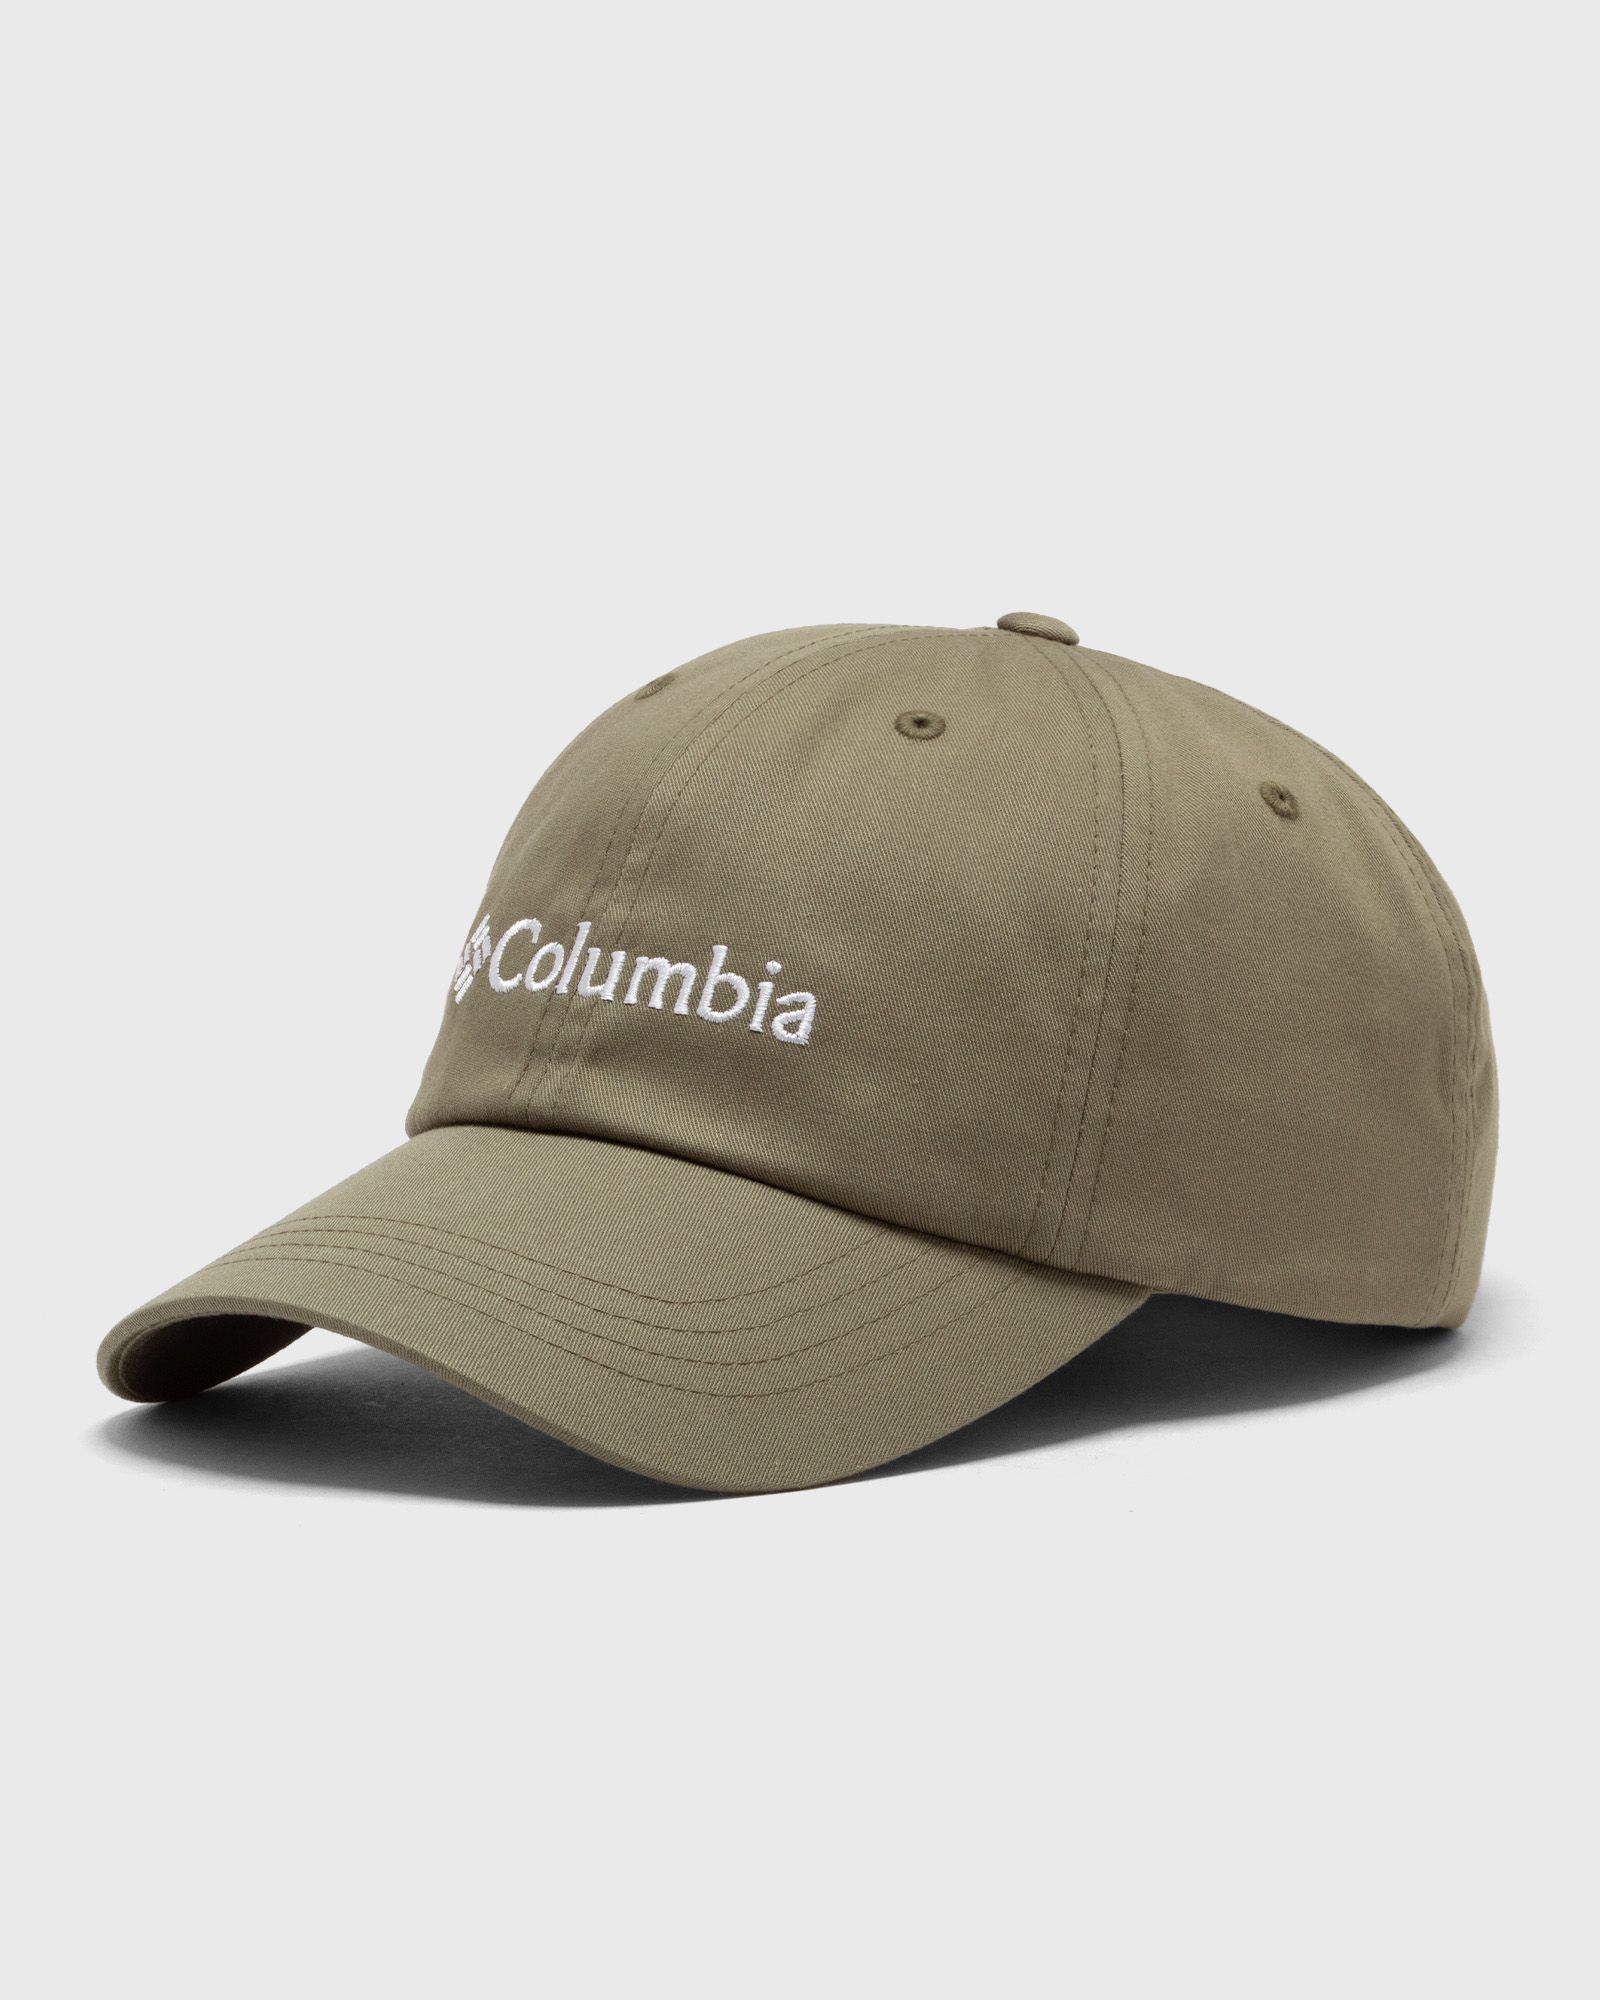 Columbia - roc ii ball cap men caps green in größe:one size